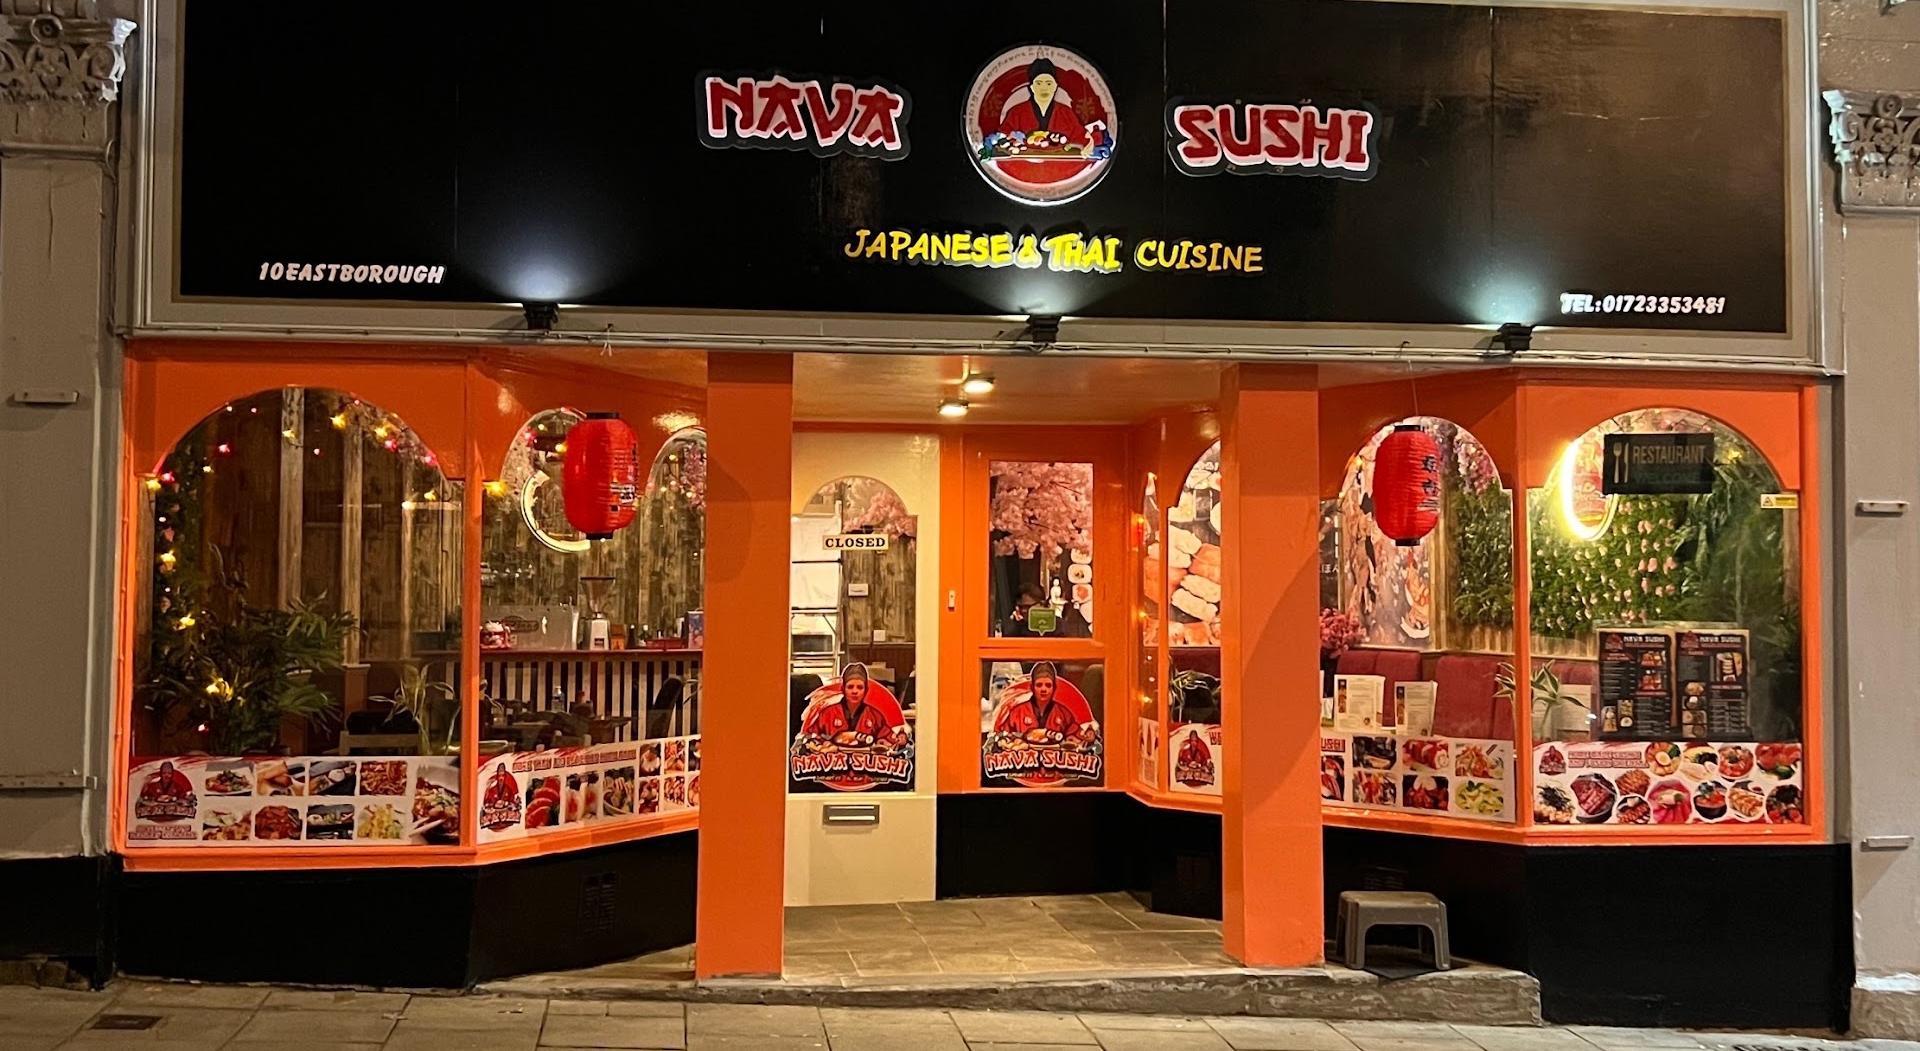 Nava Sushi culinária japonesa e tailandesa